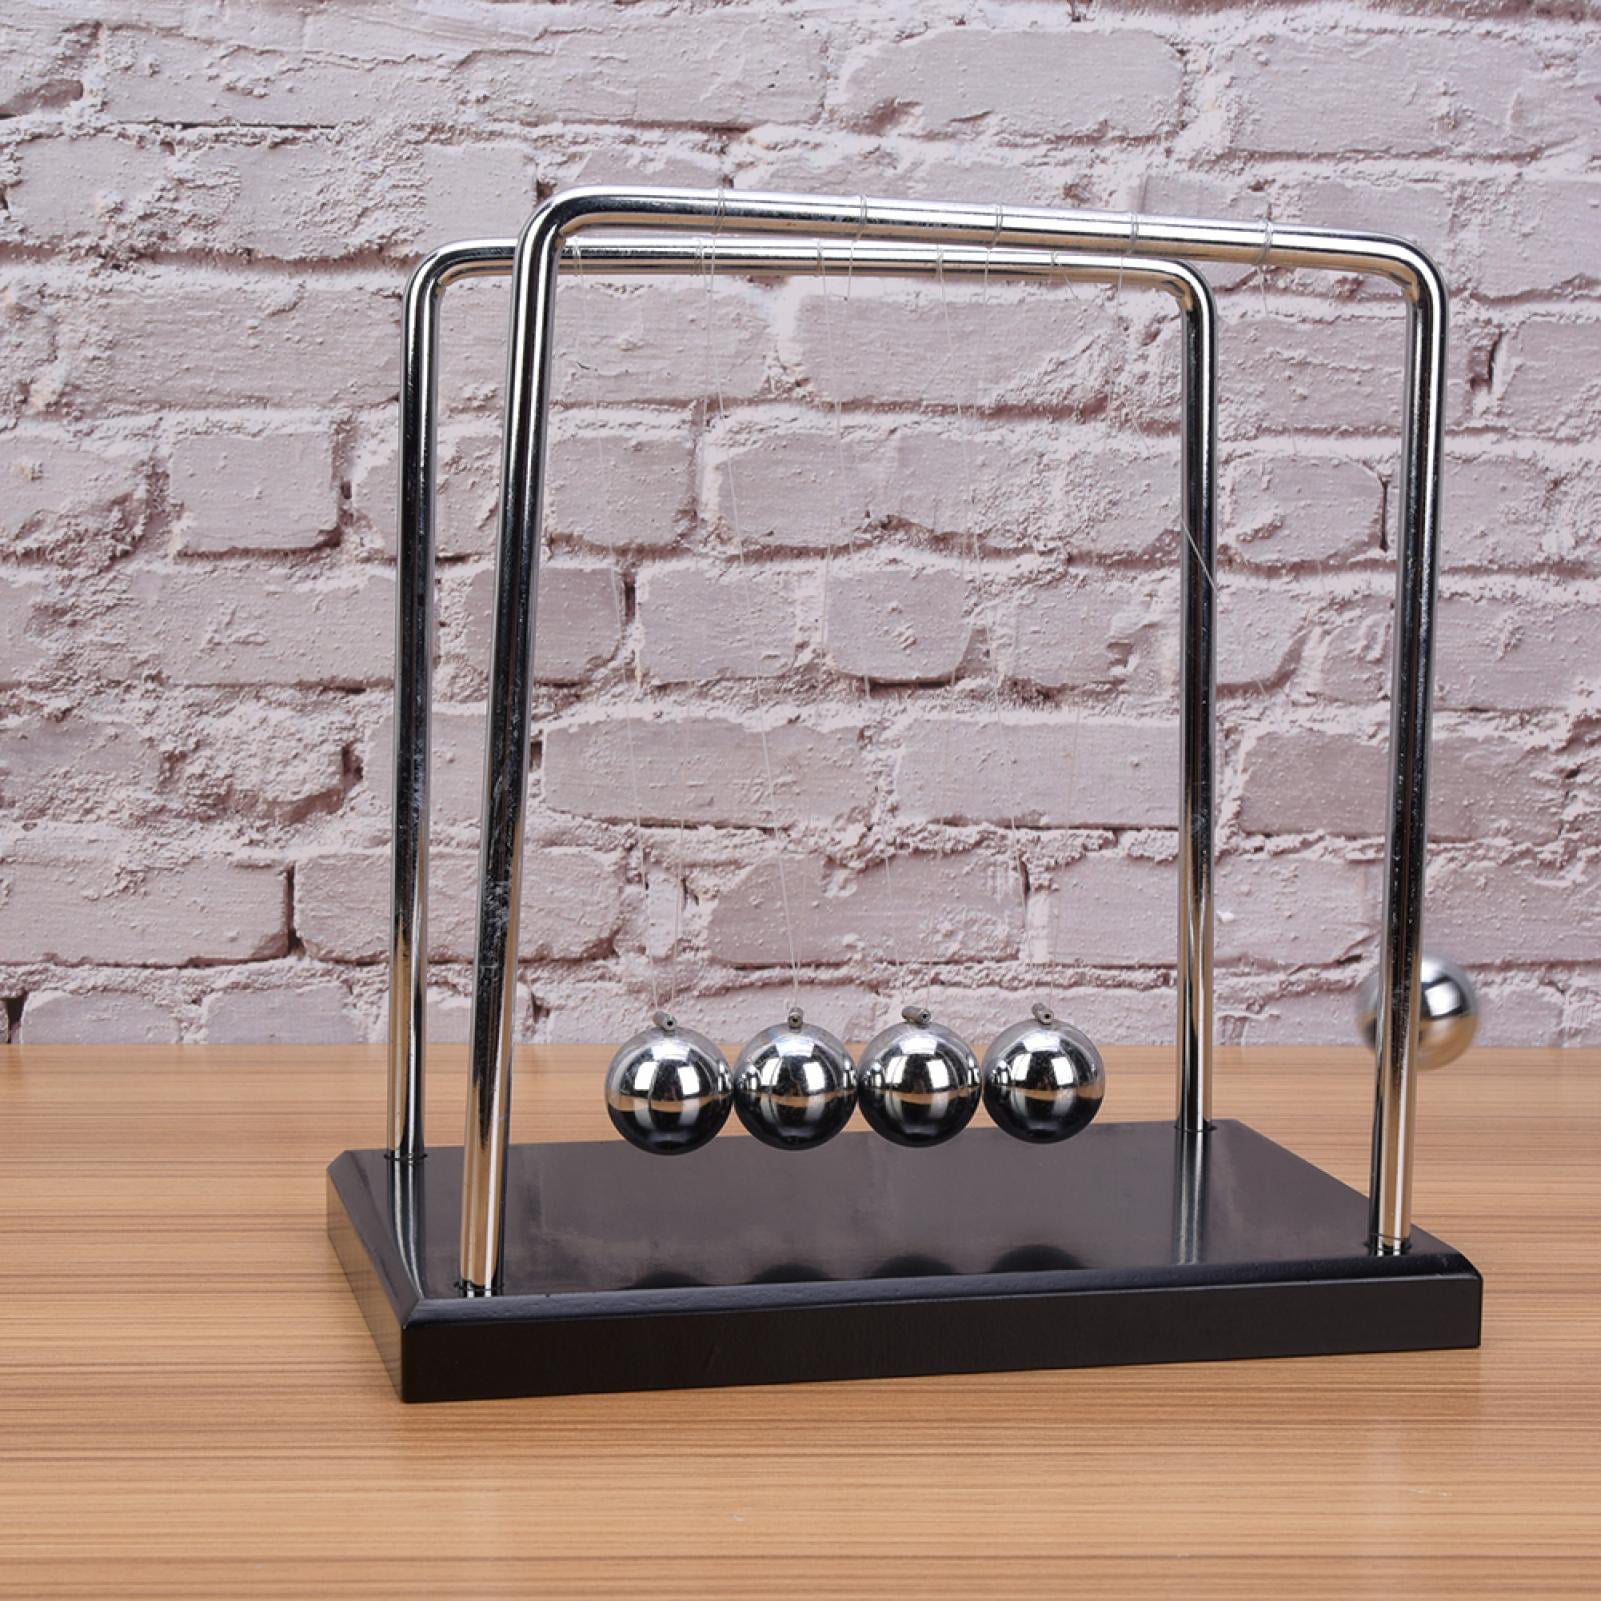 Shape Balance Pendulum Ball Toy Home Office Desk Table Ornament Gift Au 